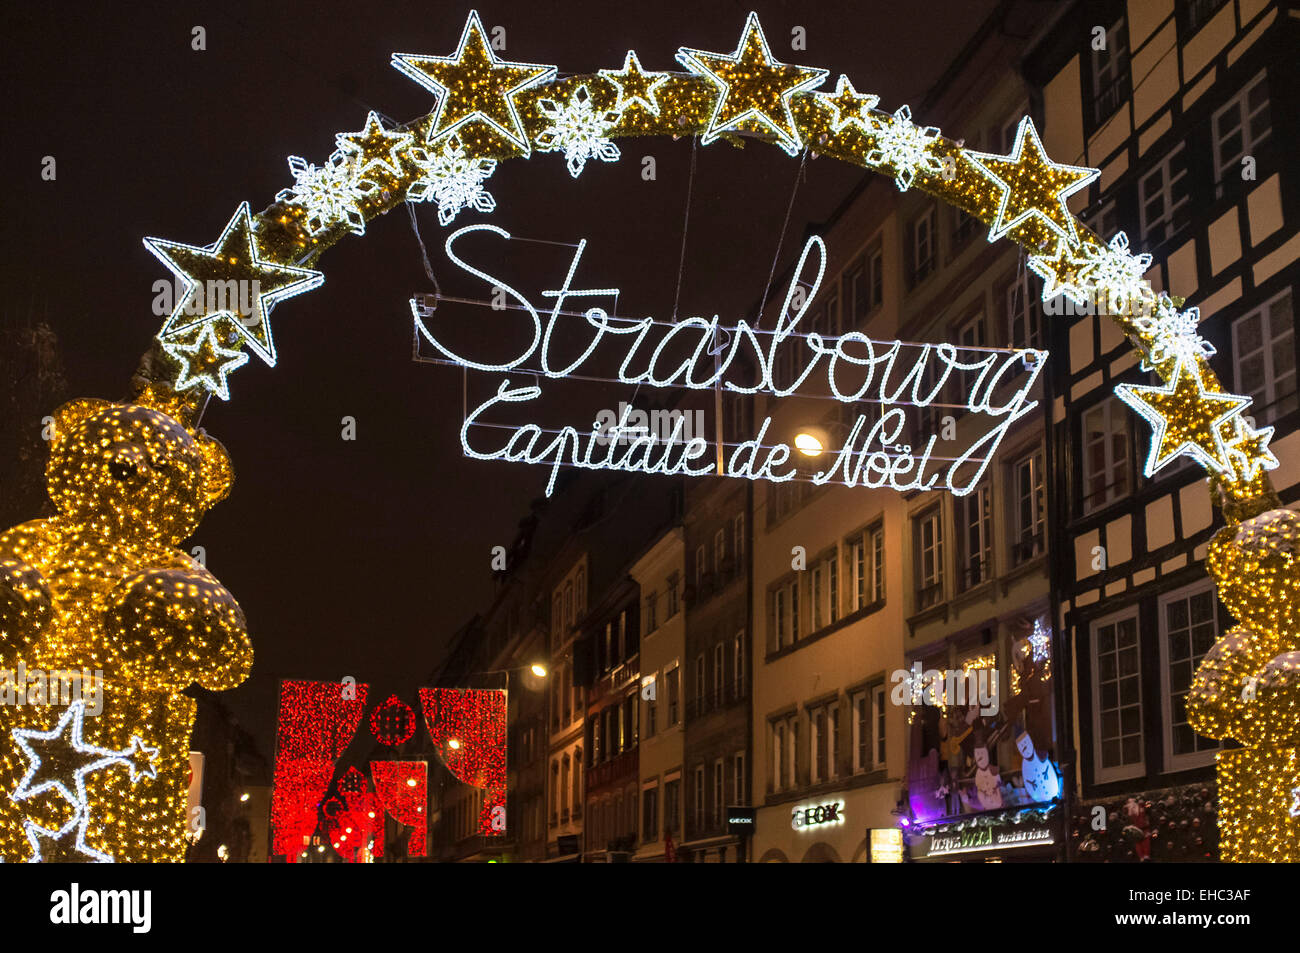 Illuminated Christmas decoration sign at night Strasbourg Alsace France Europe Stock Photo